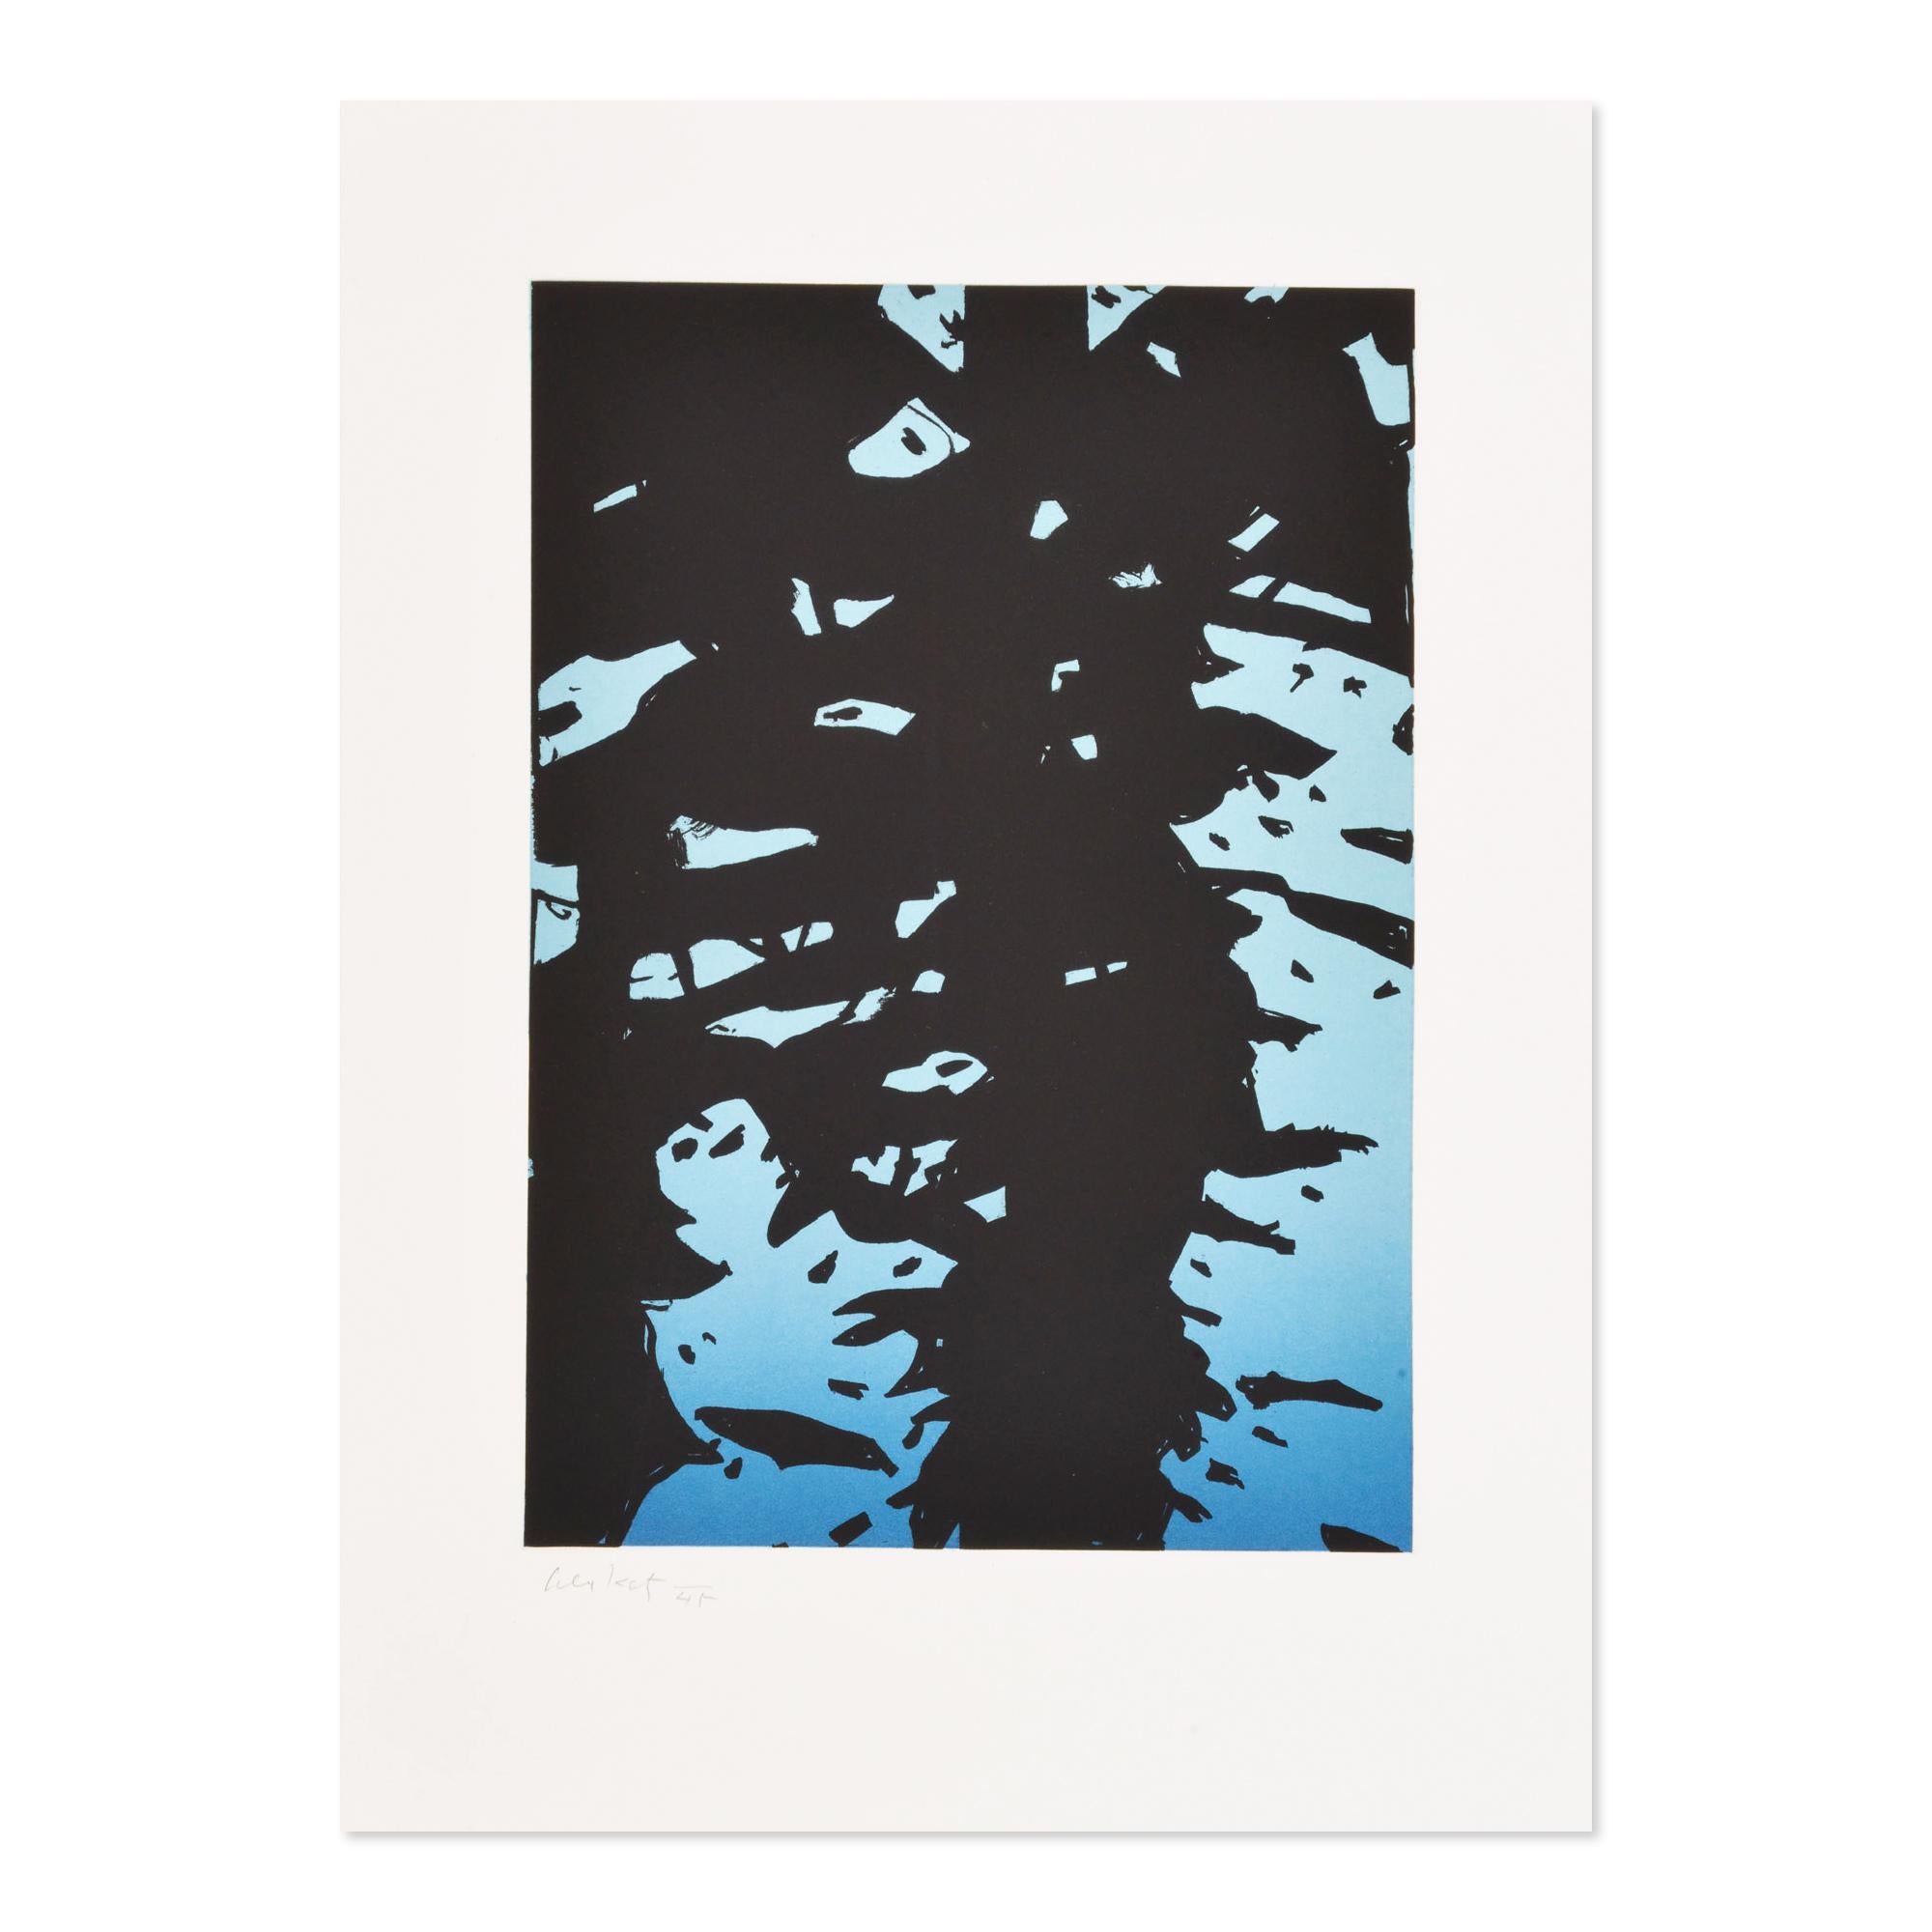 Alex Katz Abstract Print - Reflection I, Etching on Paper, Contemporary Art, Pop Art, 21st Century